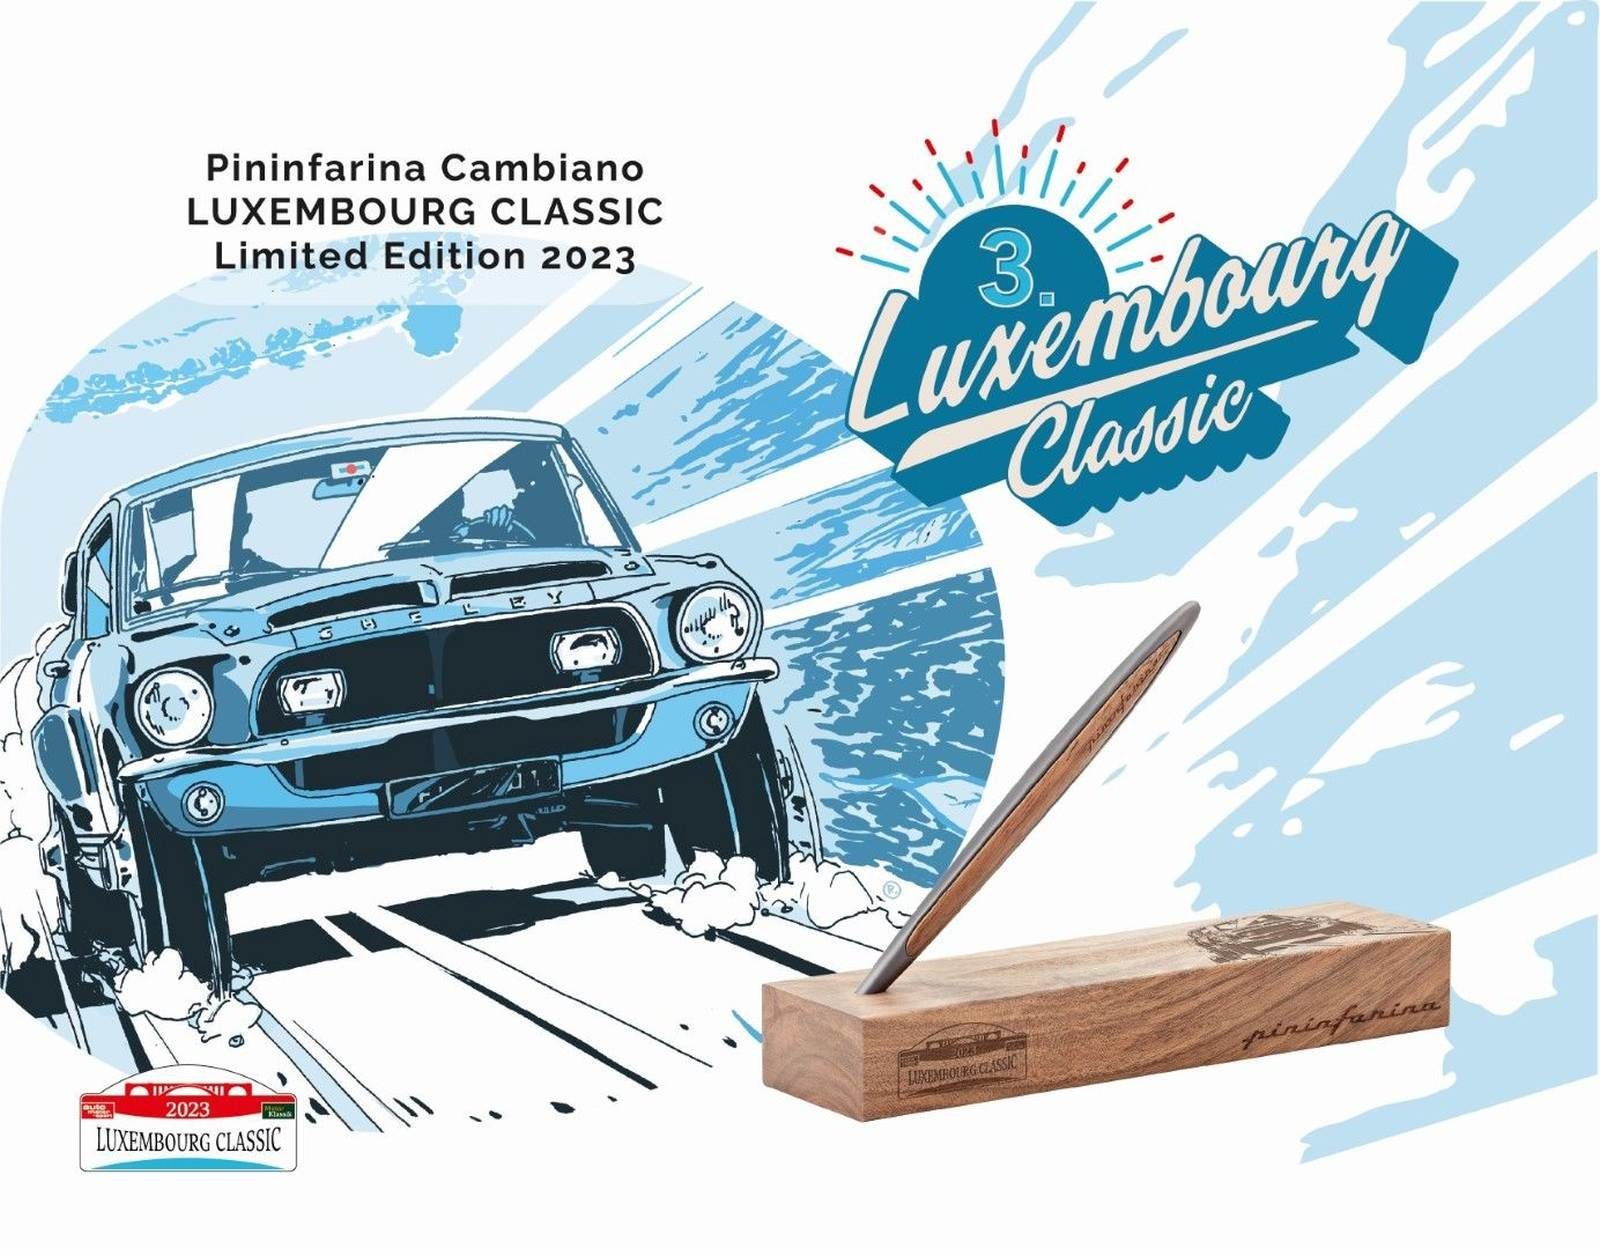 Sammlerstück Classic Bleistift Set) Luxembourg Cambiano Pininfarina LimitedEdition, (kein Pininfarina